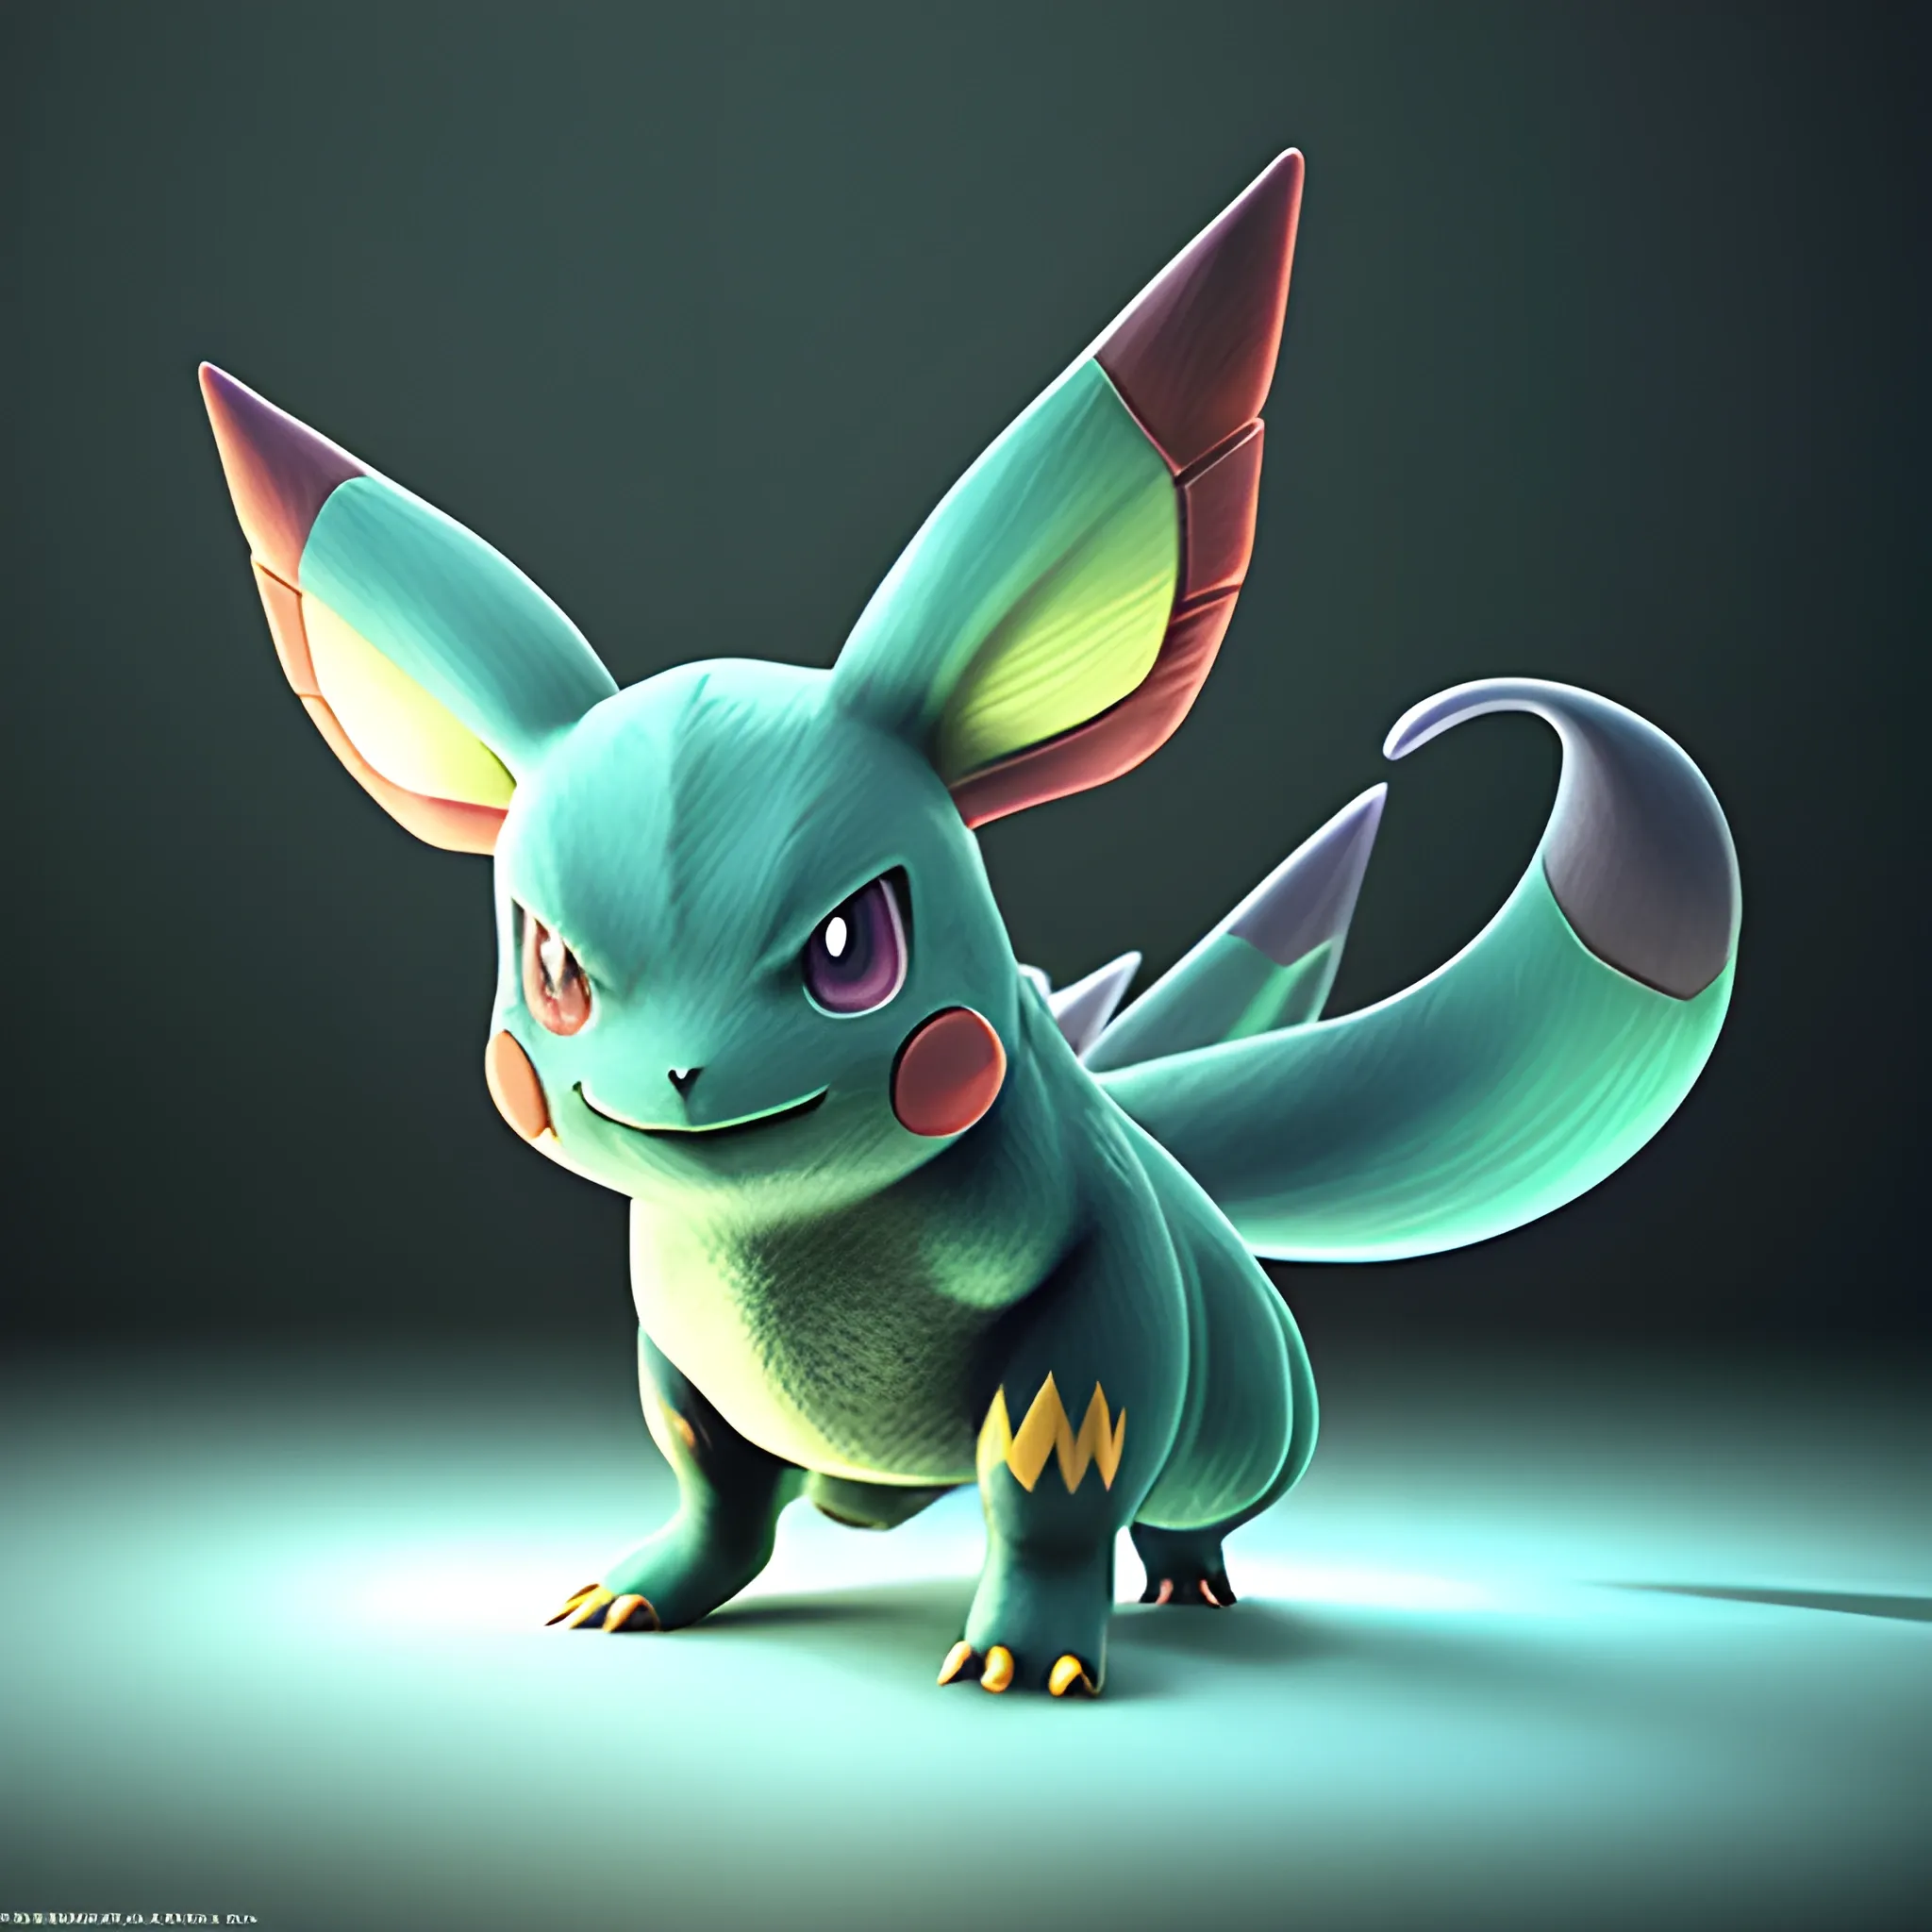 photorealistic Pokémon, photo, high detail, dramatic lighting, 3D